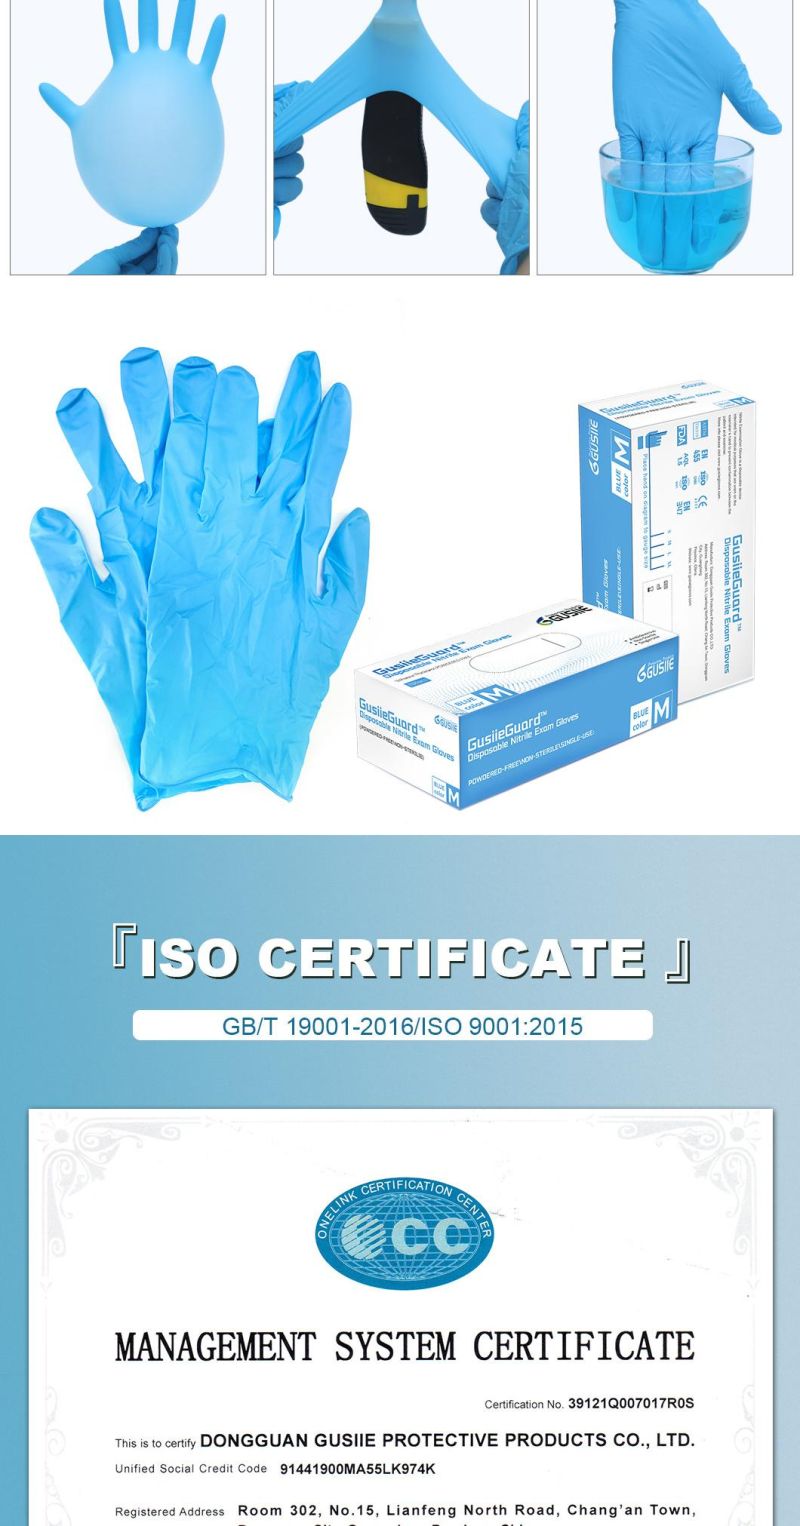 Disposable Nitrile Gloves Medical Examination Gloves Powder Free Large Gloves